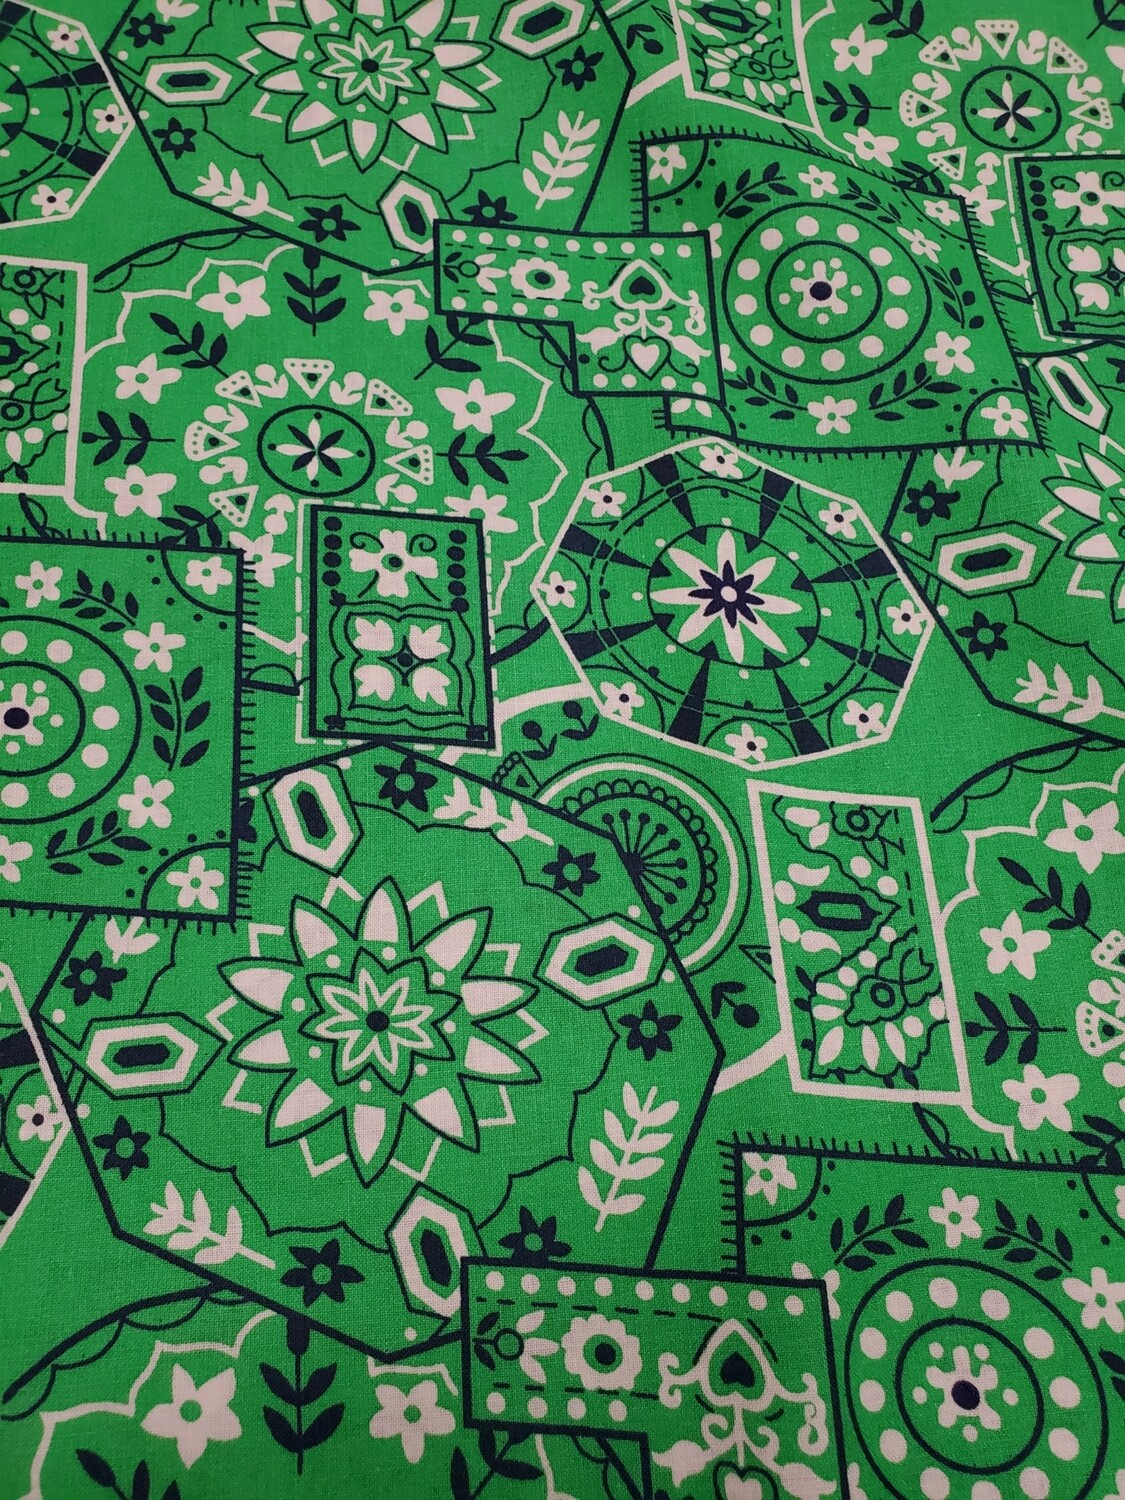 Bandana Print in Green